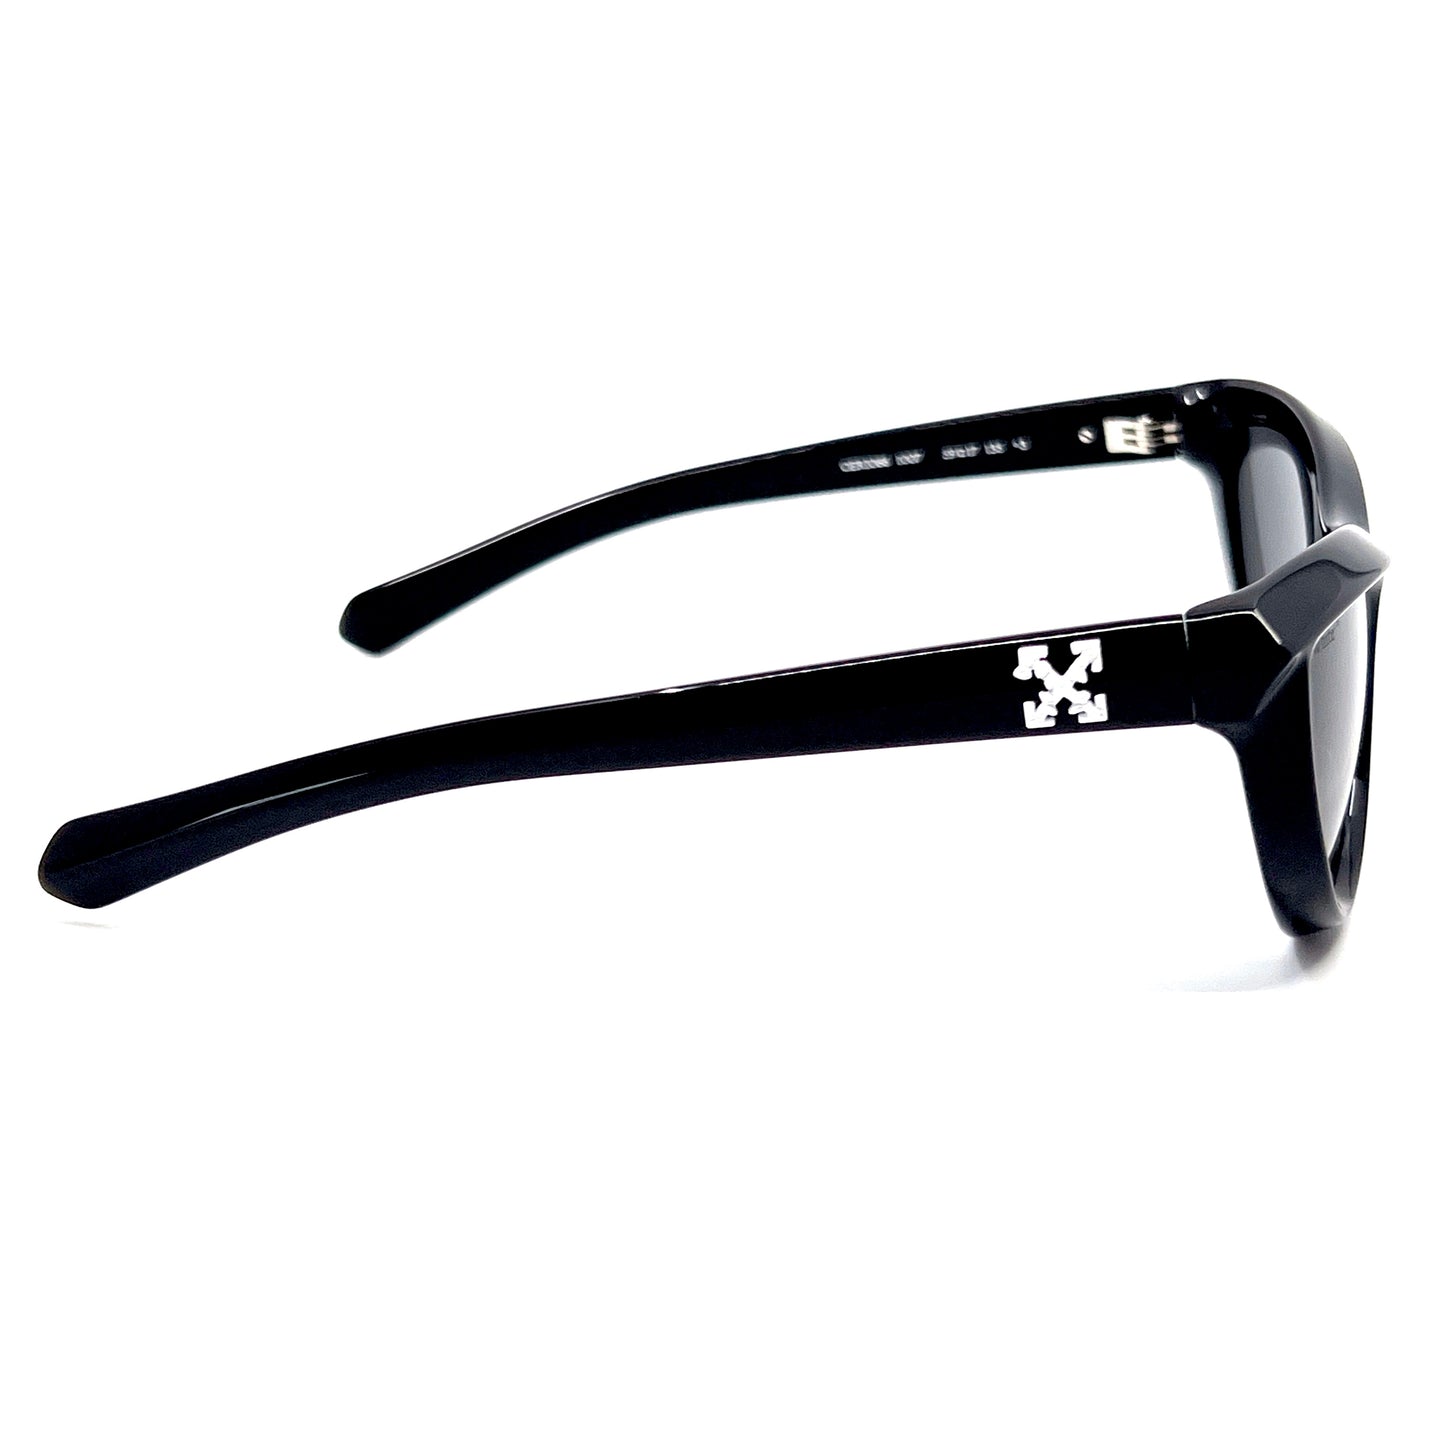 OFF-WHITE Sunglasses ATLANTA OERI066 1007